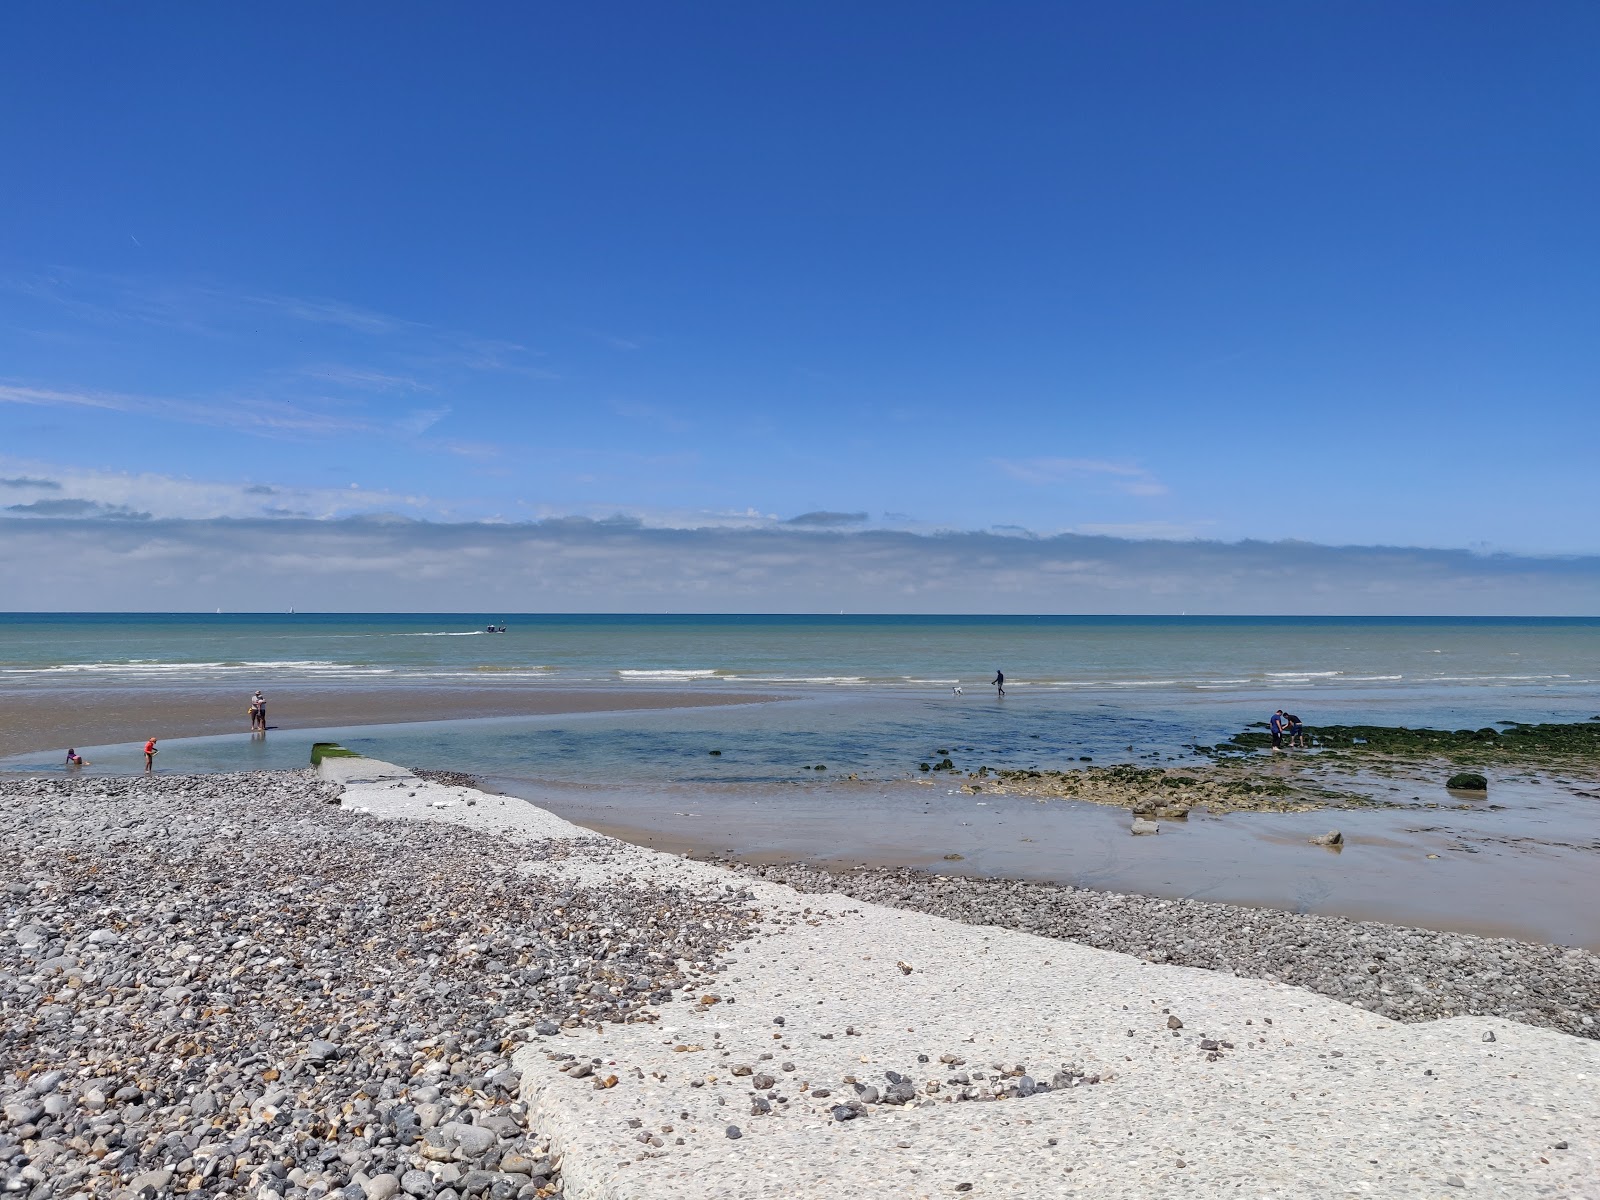 Foto de Plage de St Aubin sur Mer - lugar popular entre os apreciadores de relaxamento